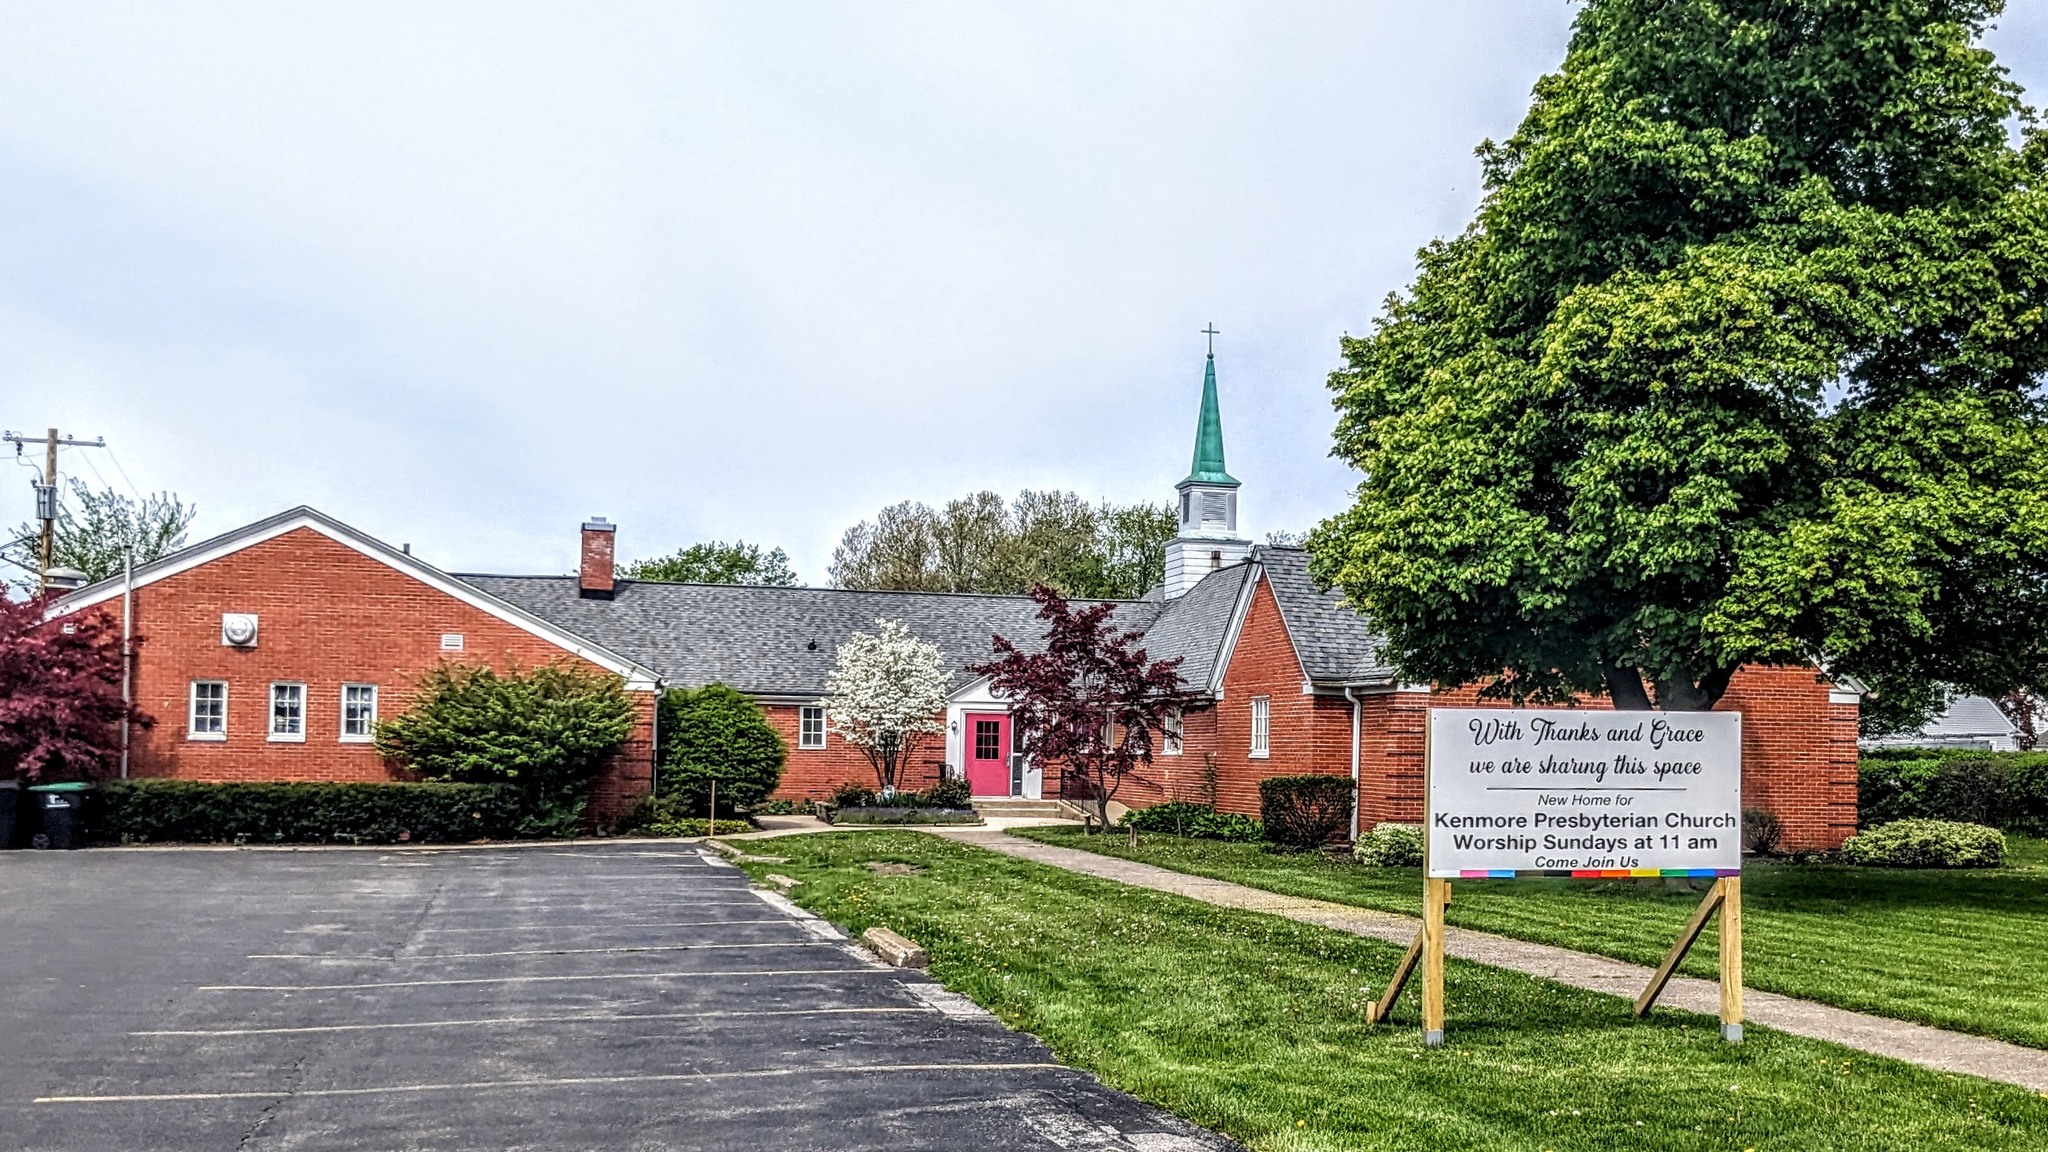 Kenmore Presbyterian Church